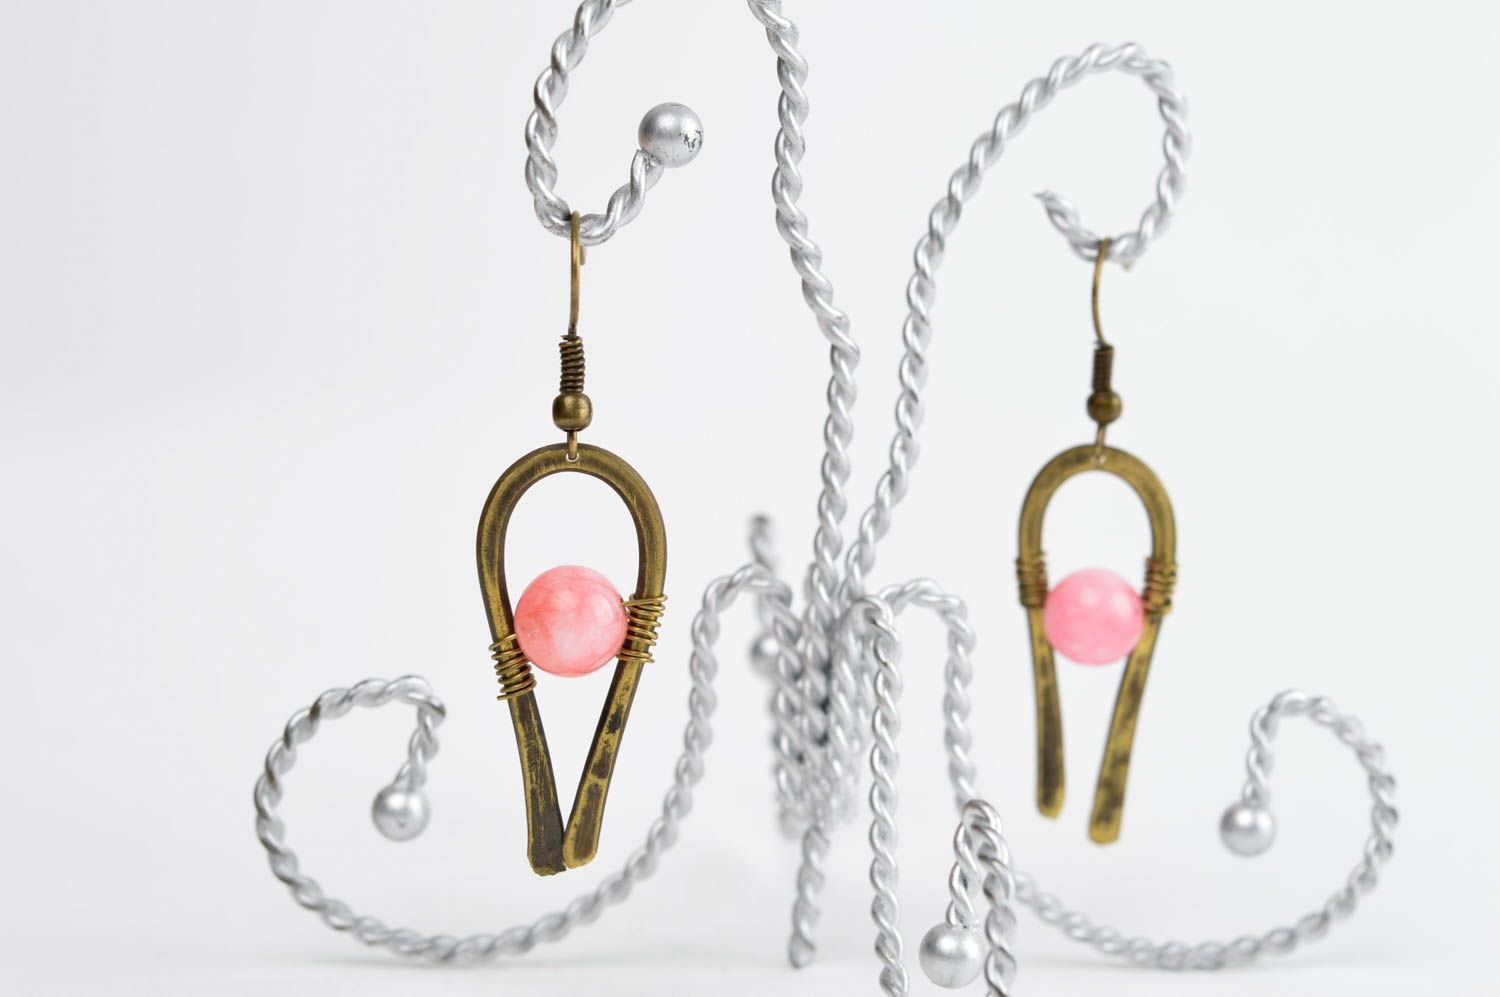 Womens handmade metal earrings cool earrings costume jewelry designs gift ideas photo 1